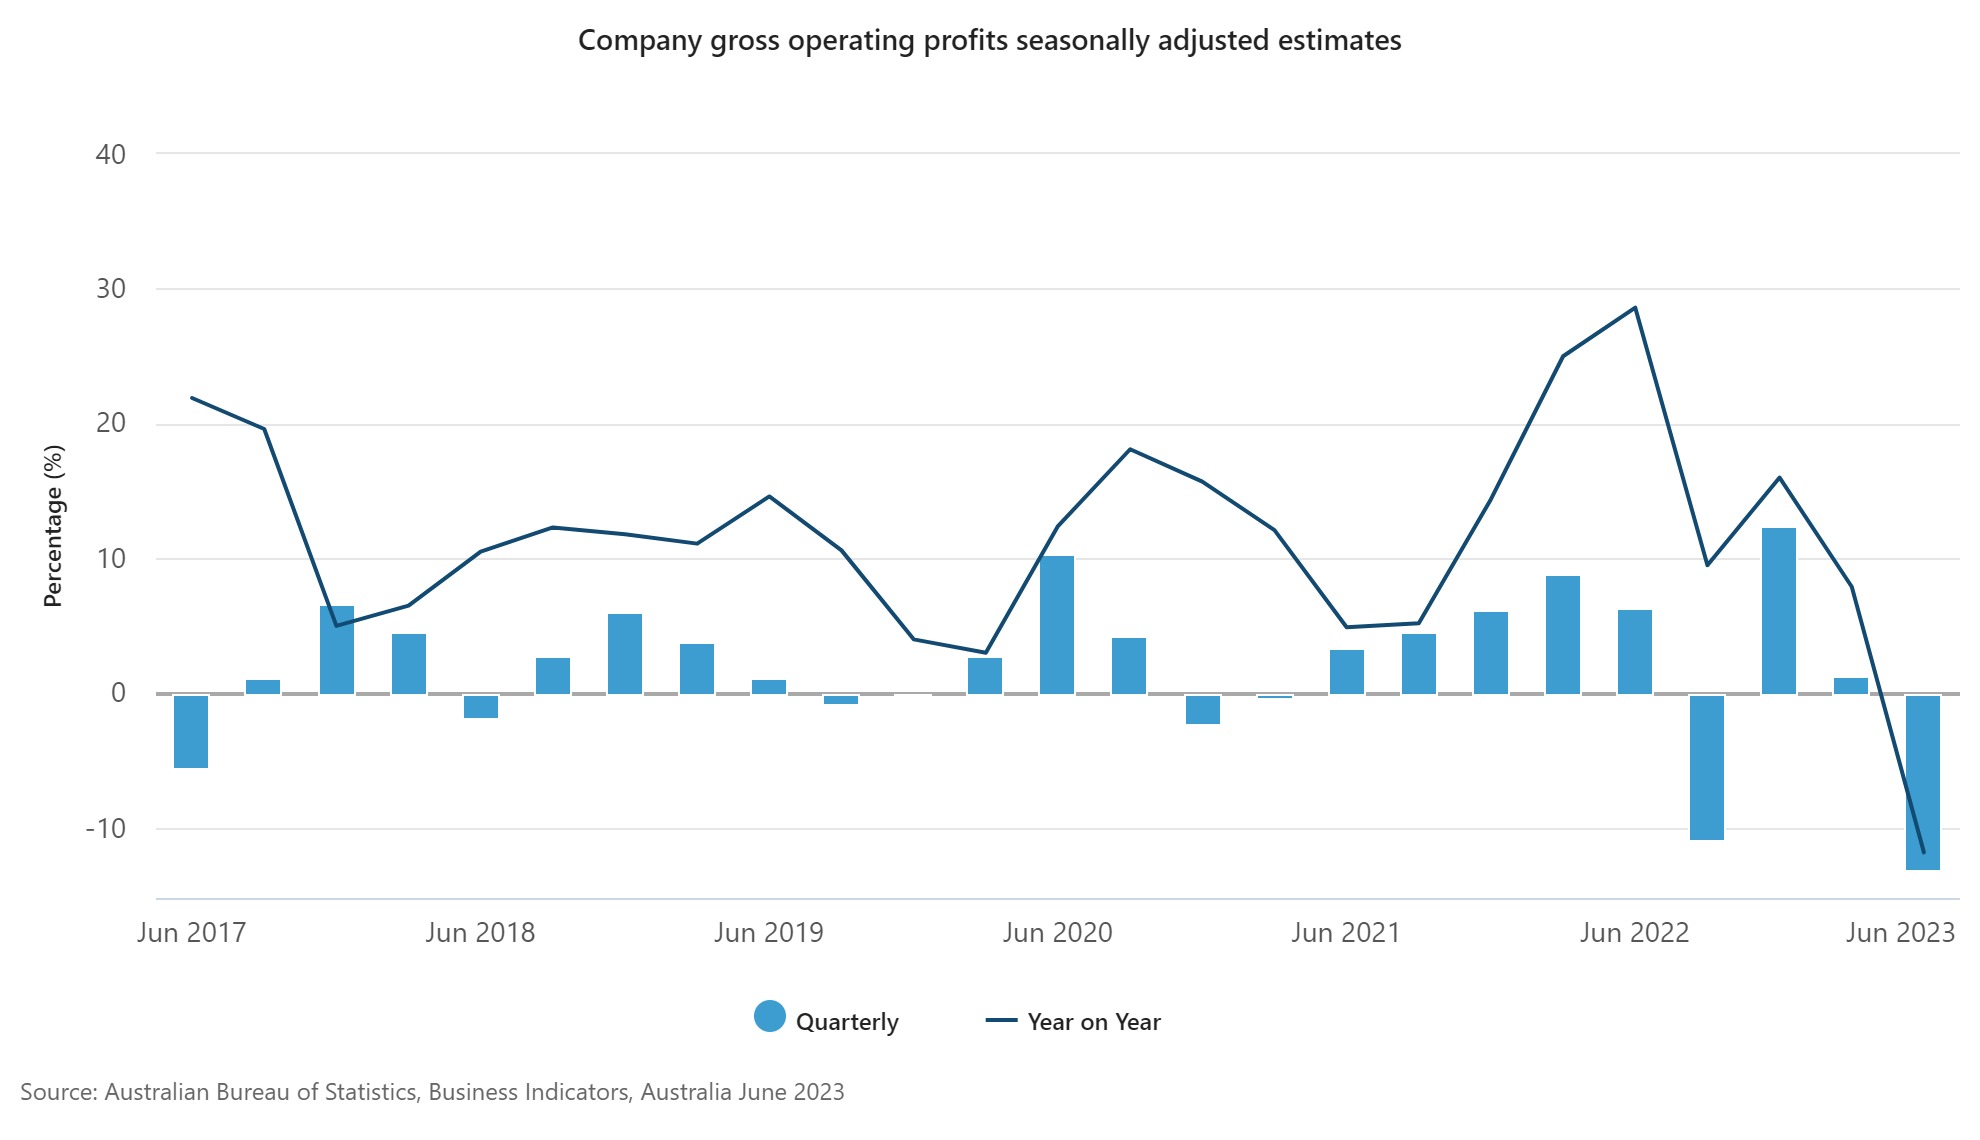 Company gross operating profits seasonally adjusted estimates. Source: ABS